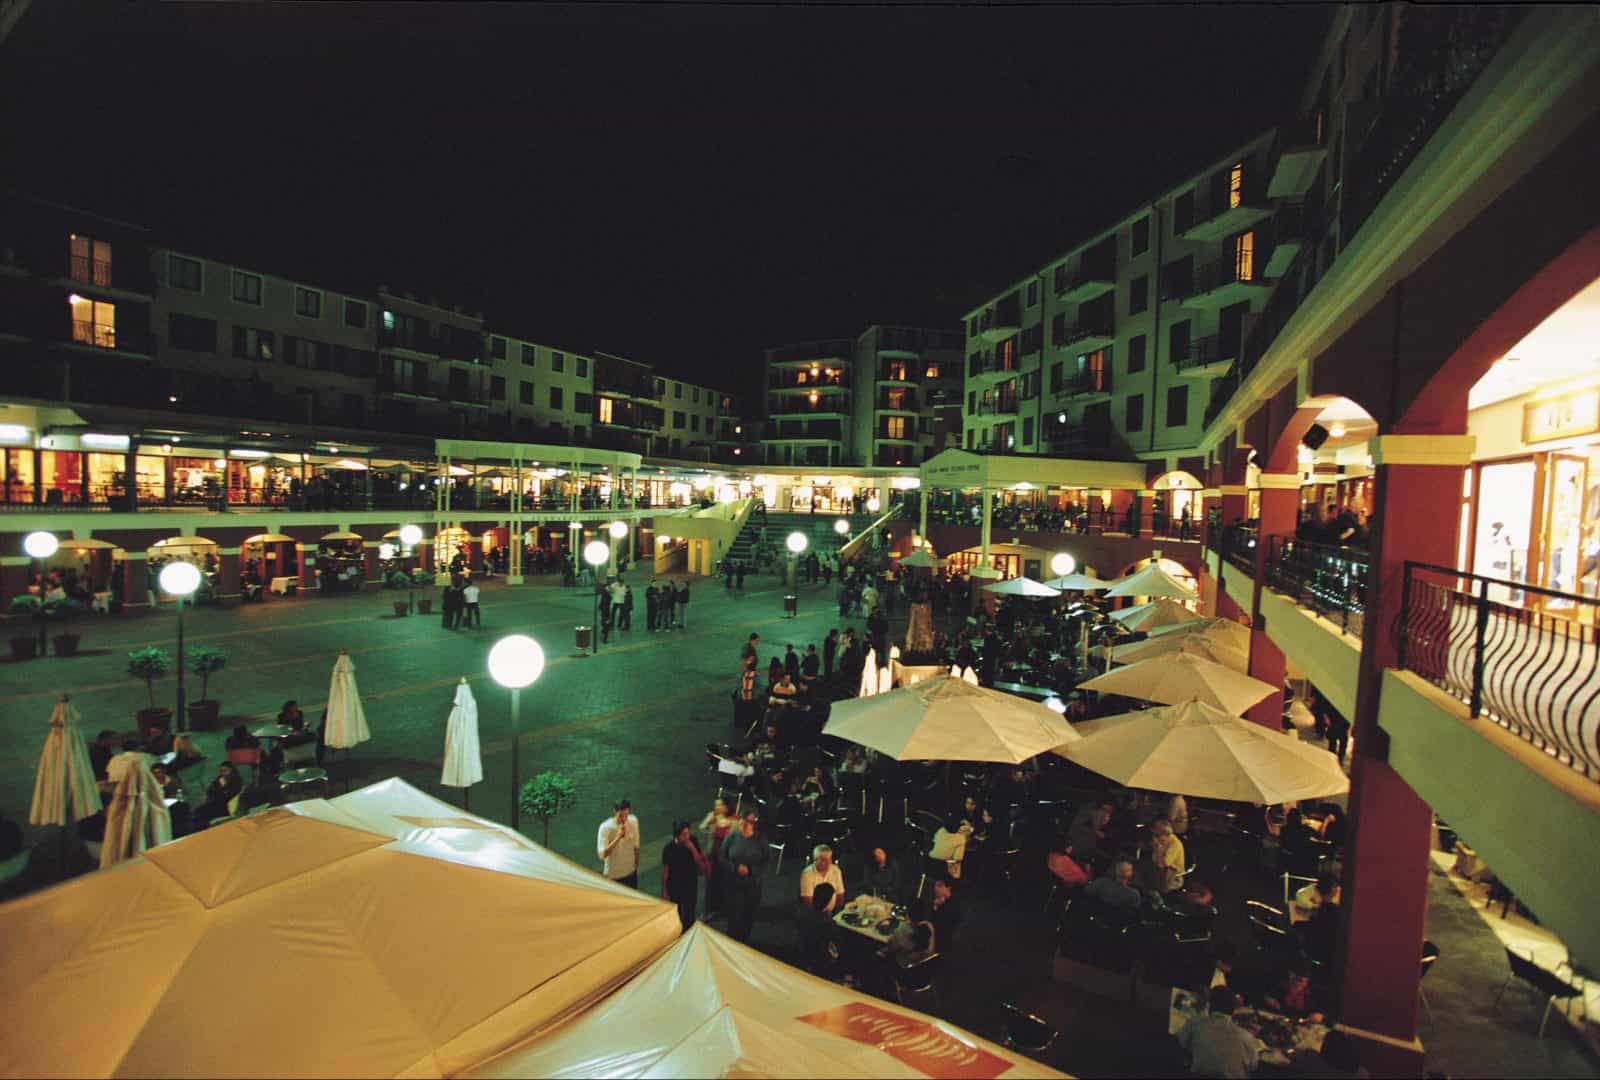 View of the Italian Forum at night, Leichhardt